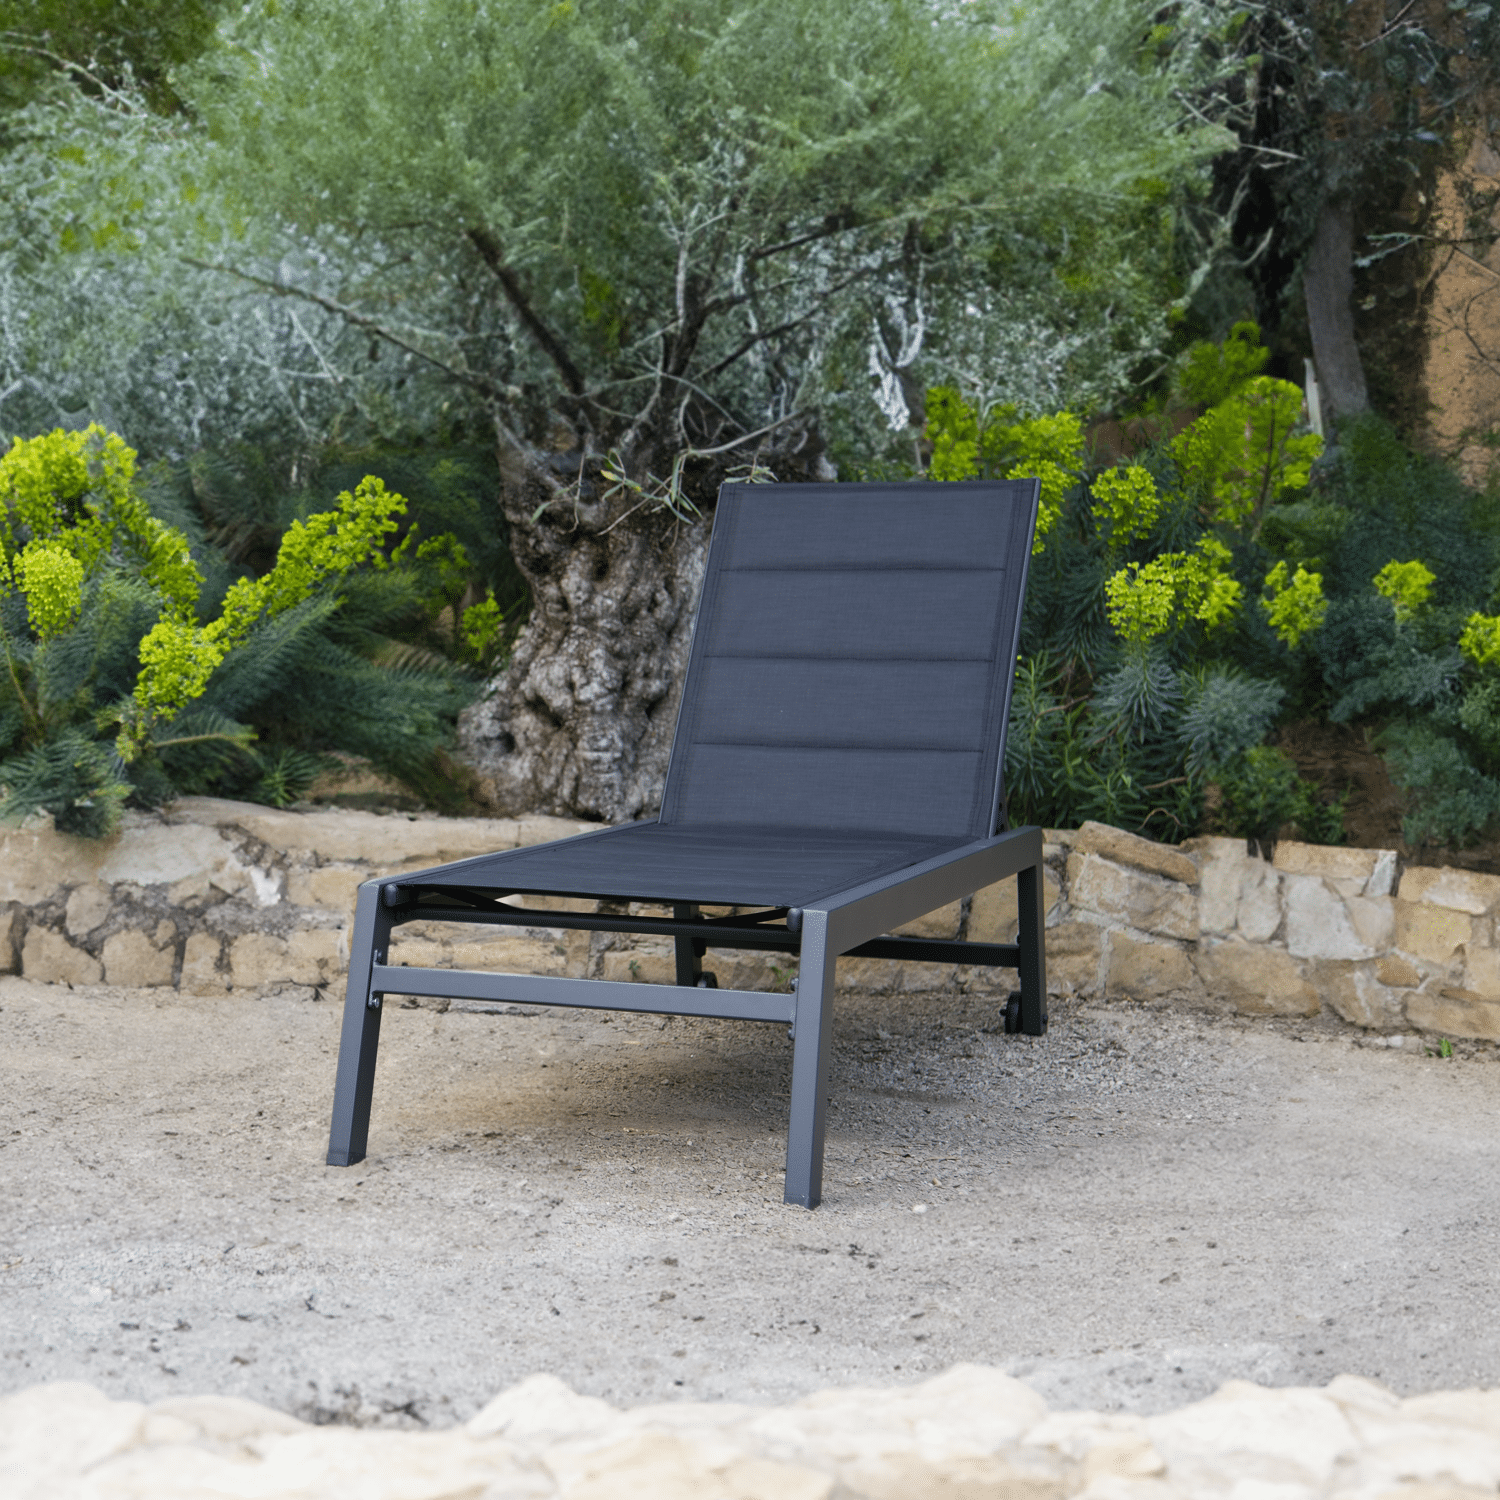 BARBADOS ligstoel in zwart textilene - antraciet grijs aluminium